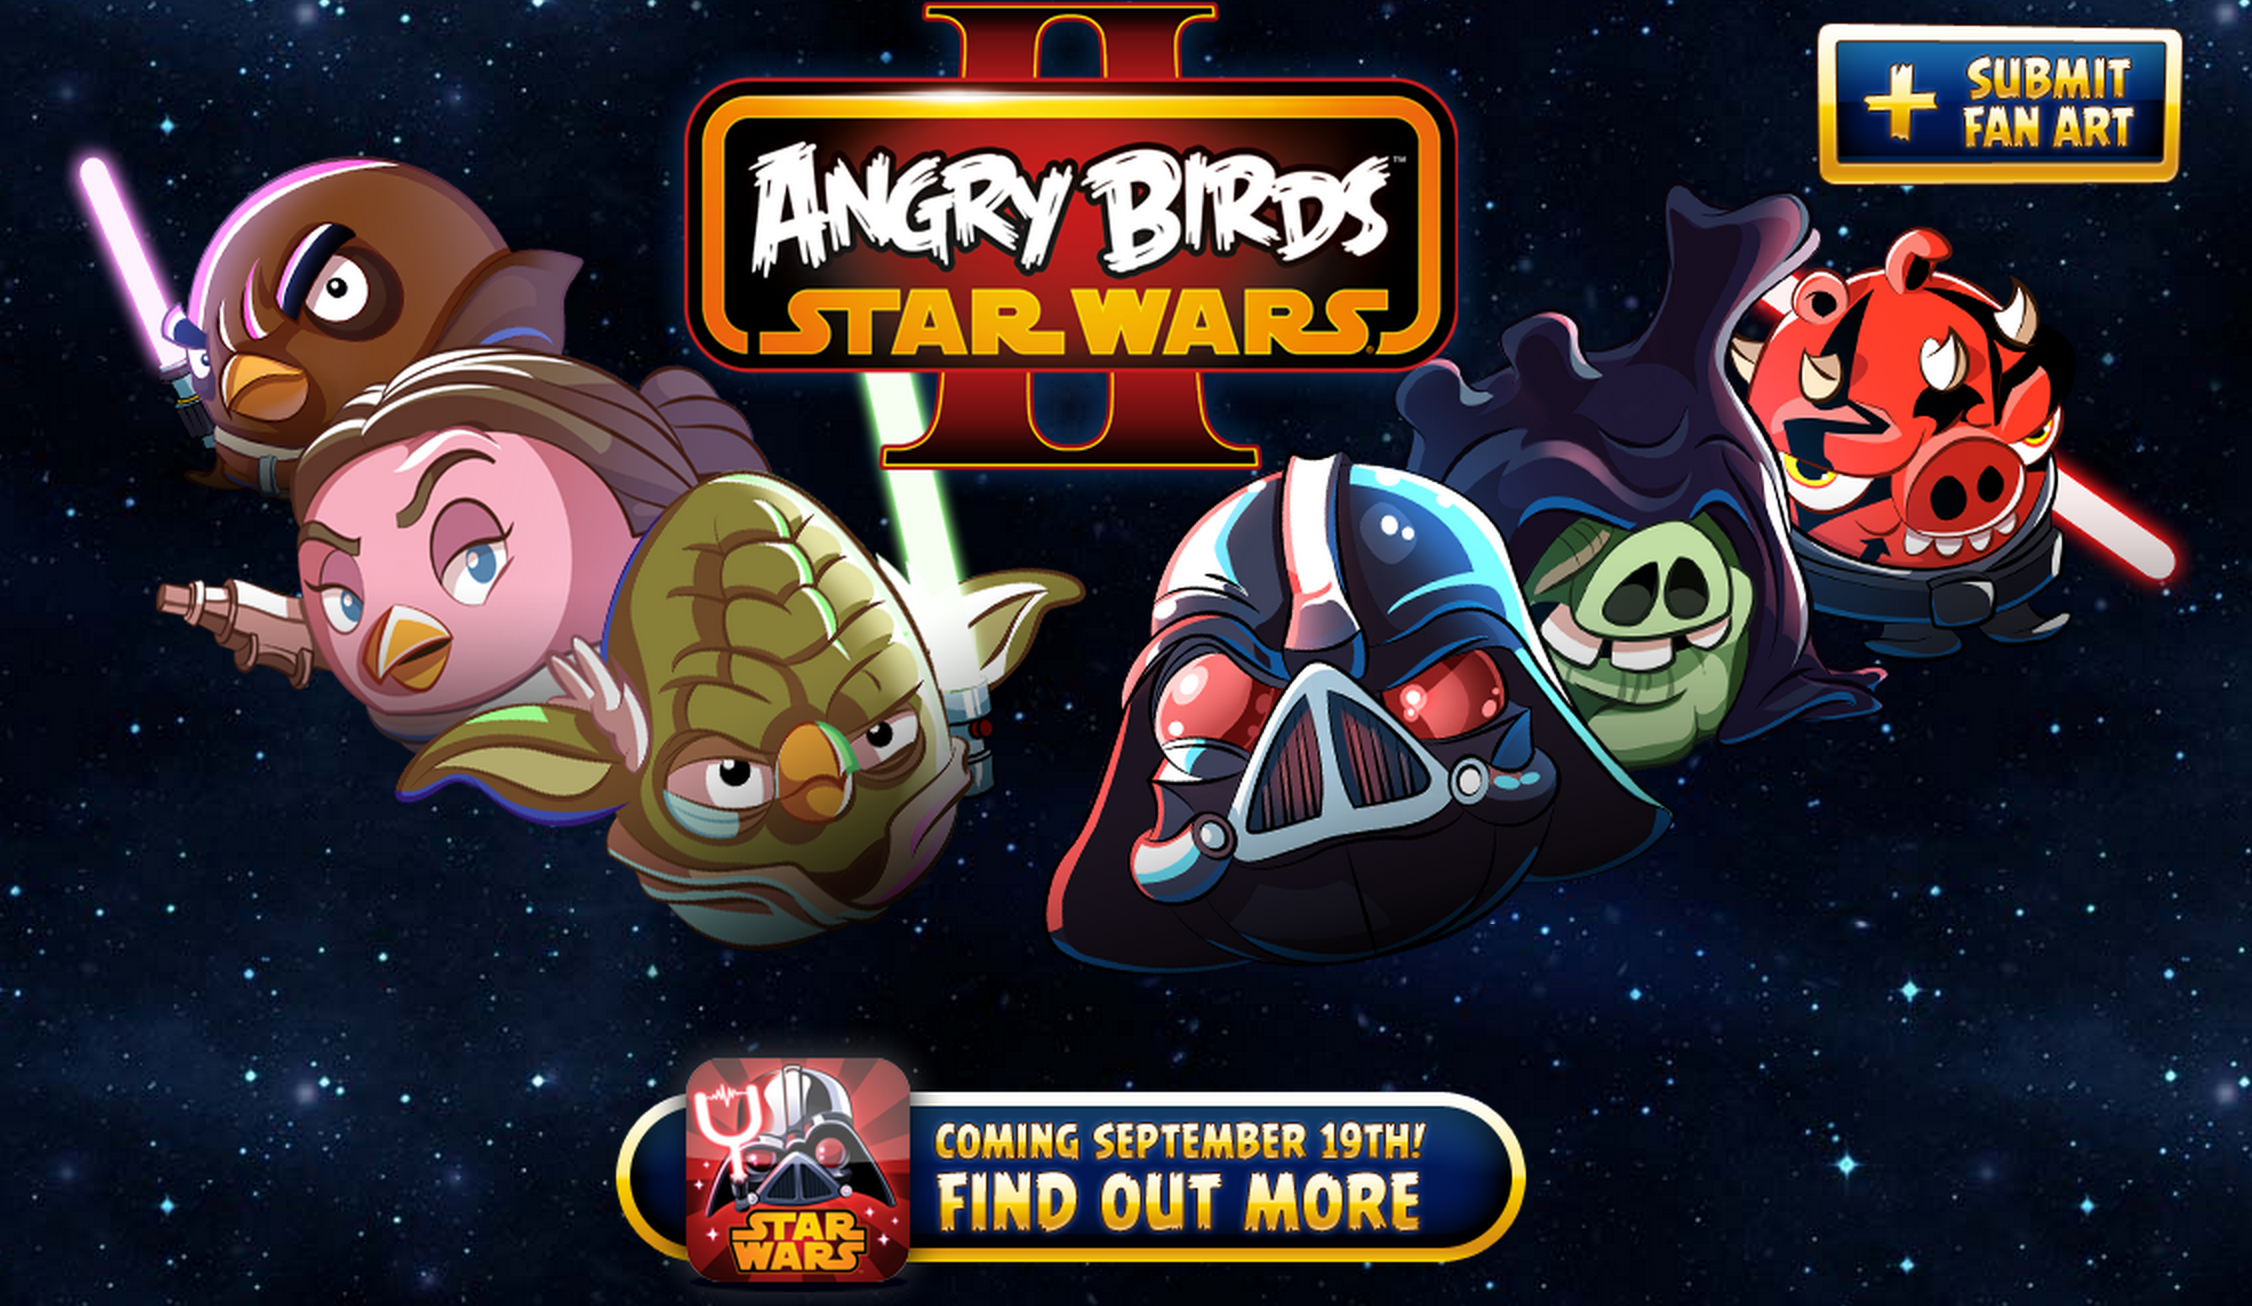 Энгри бердз star wars. Игра Angry Birds Star Wars 3. Энгри Бердс Звездные войны 2. Энгри бёрдз Стар ВАРС 1. Игра Angry Birds Star Wars 1.